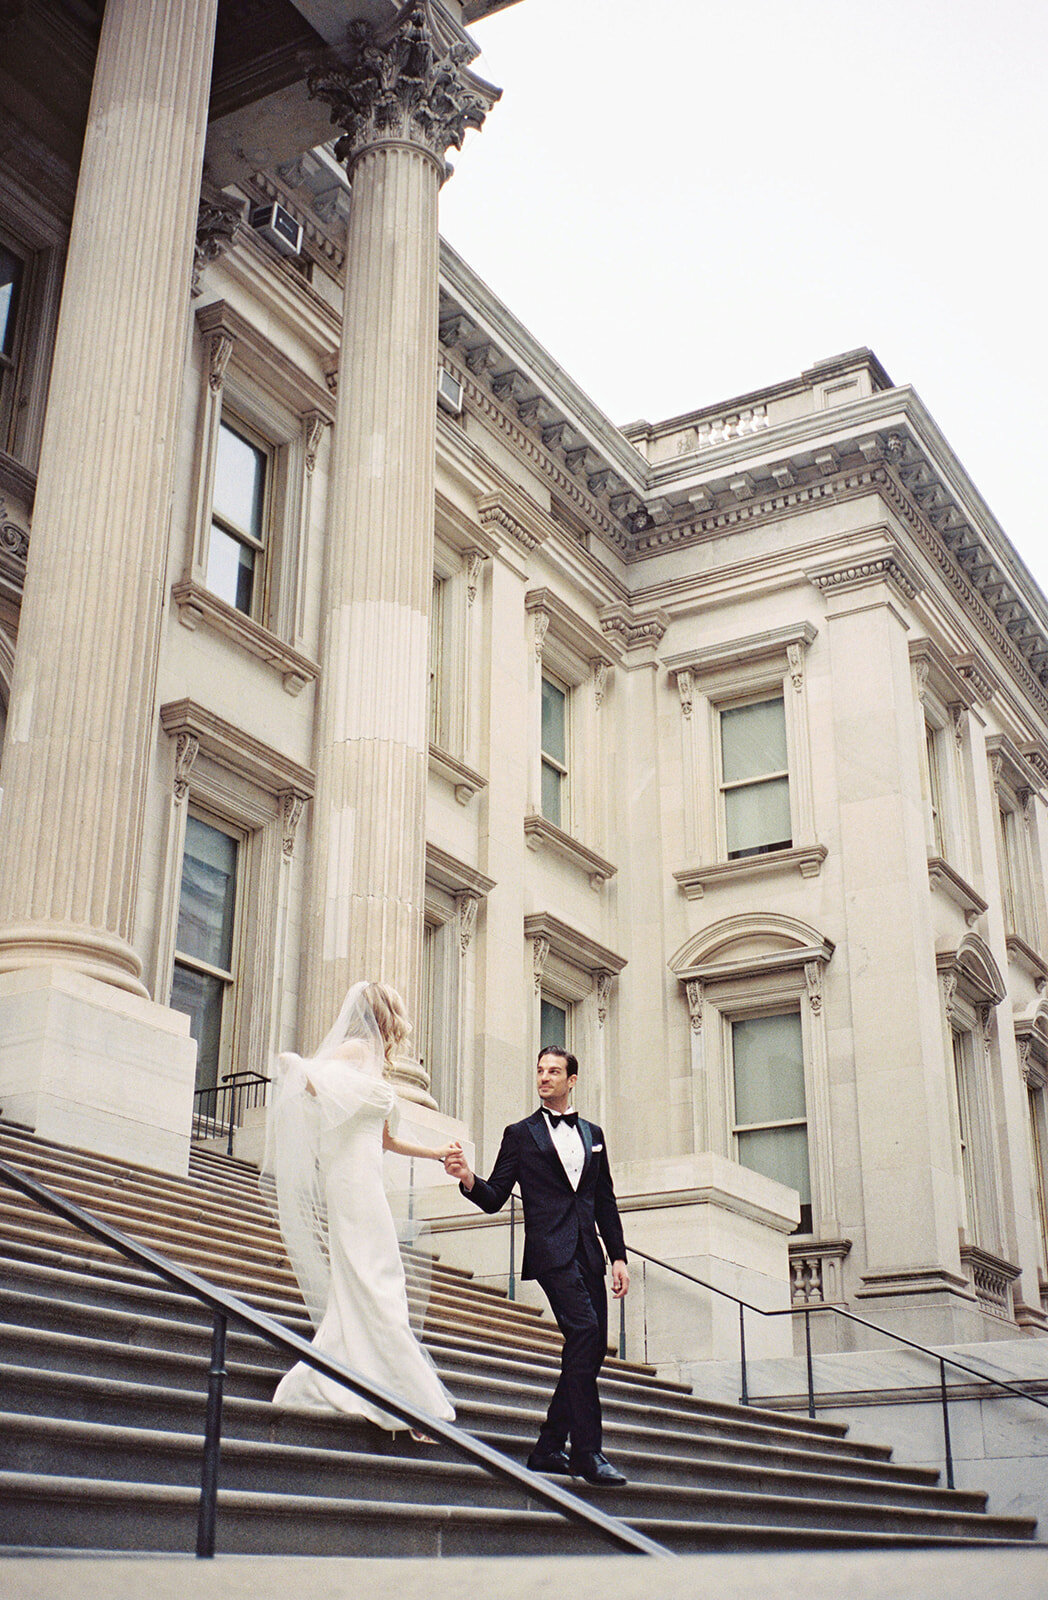 The Plaza Hotel - New York City - Elopement Wedding - Stephanie Michelle Photography - _stephaniemichellephotog - 4-R1-048-22A